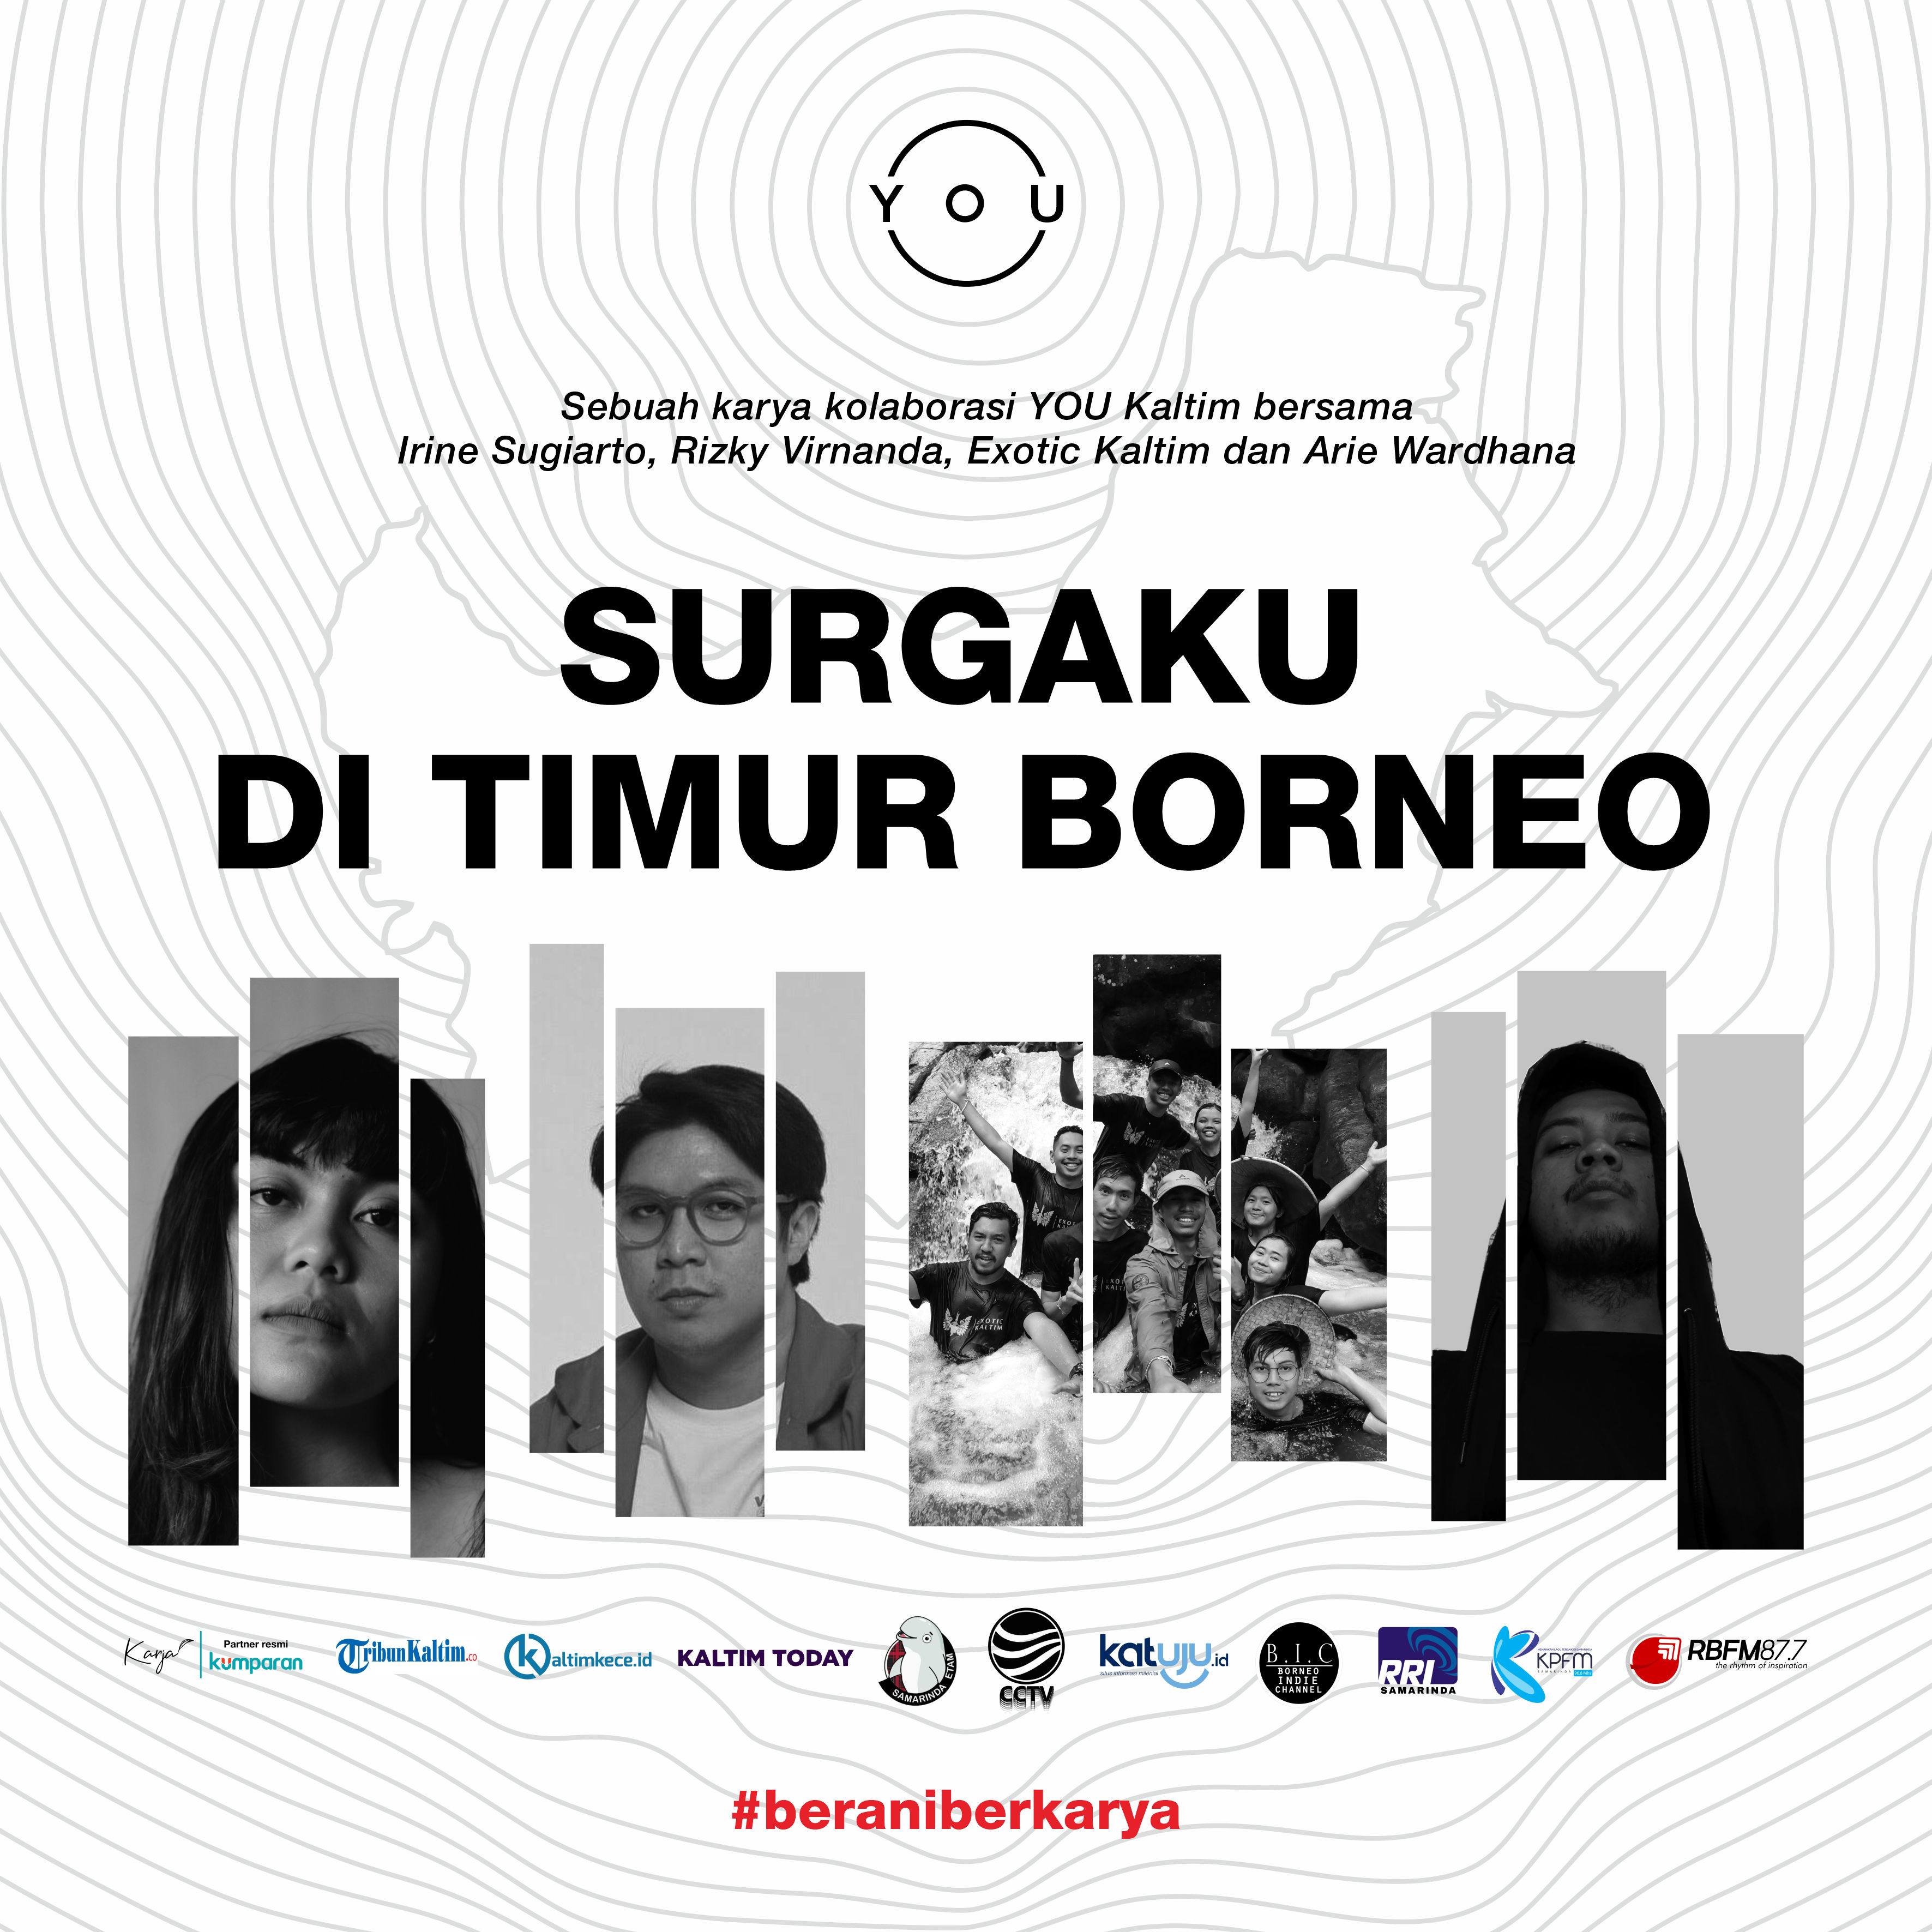 Surgaku di Timur Borneo, Sebuah Karya Kolaborasi dan Dedikasi Komunitas Lokal Kaltim